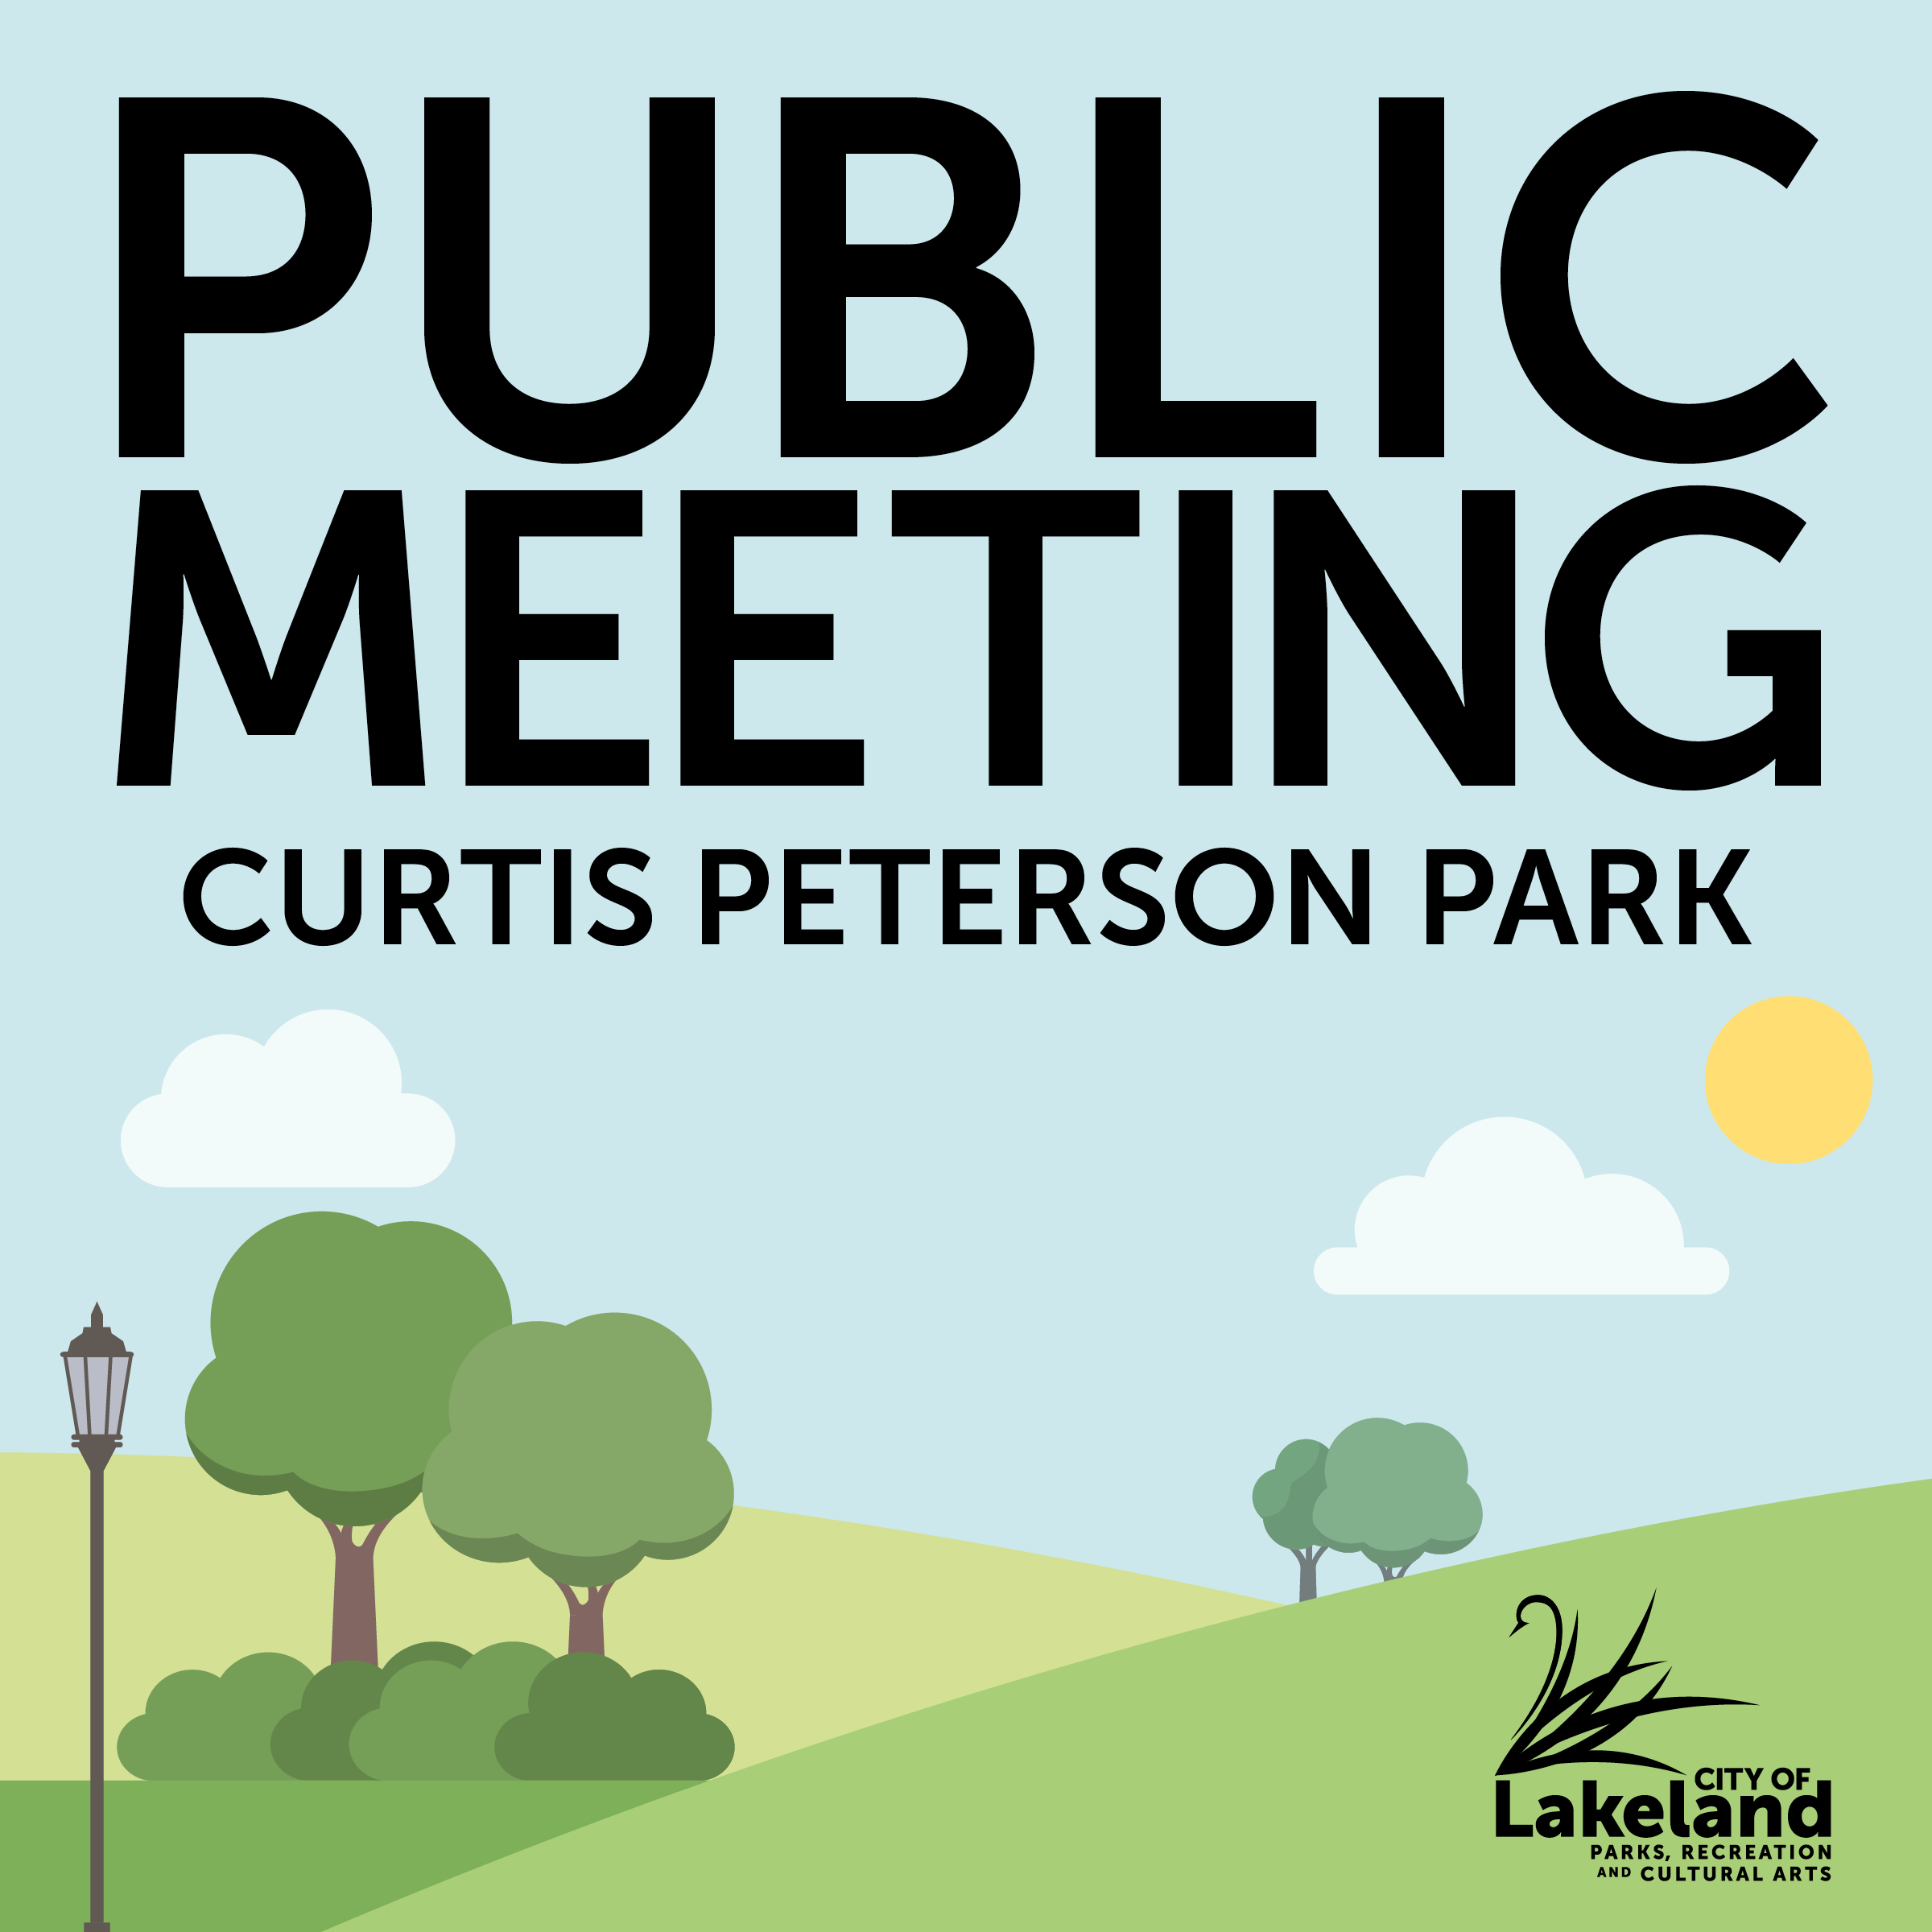 Verbiage: Public Meeting Curtis Peterson Park